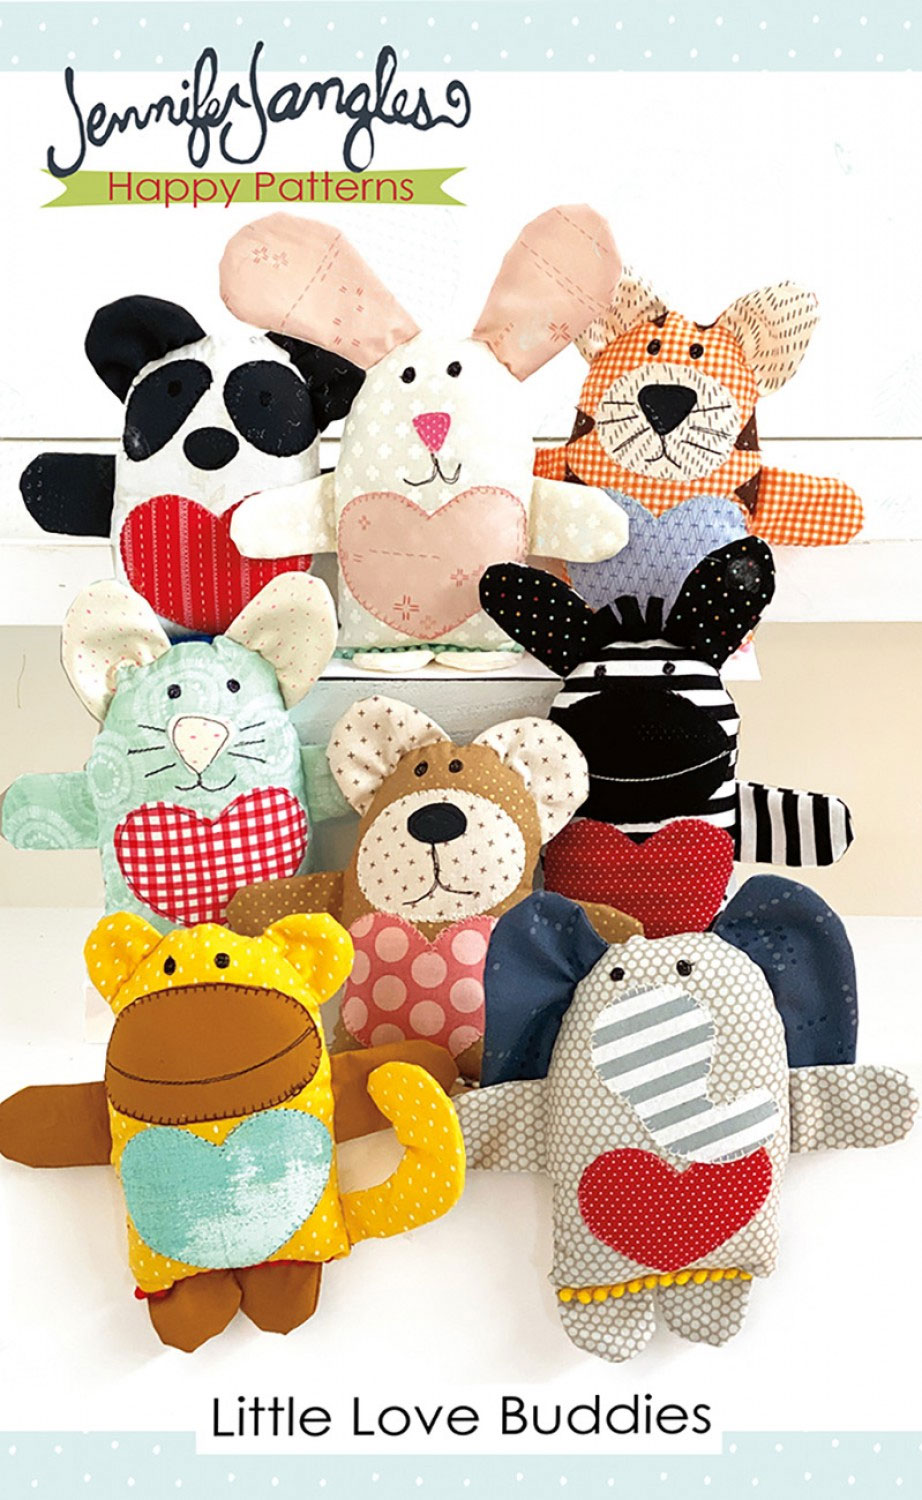 Little-Love-Buddies-soft-toy-sewing-pattern-Jennifer-Jangles-front